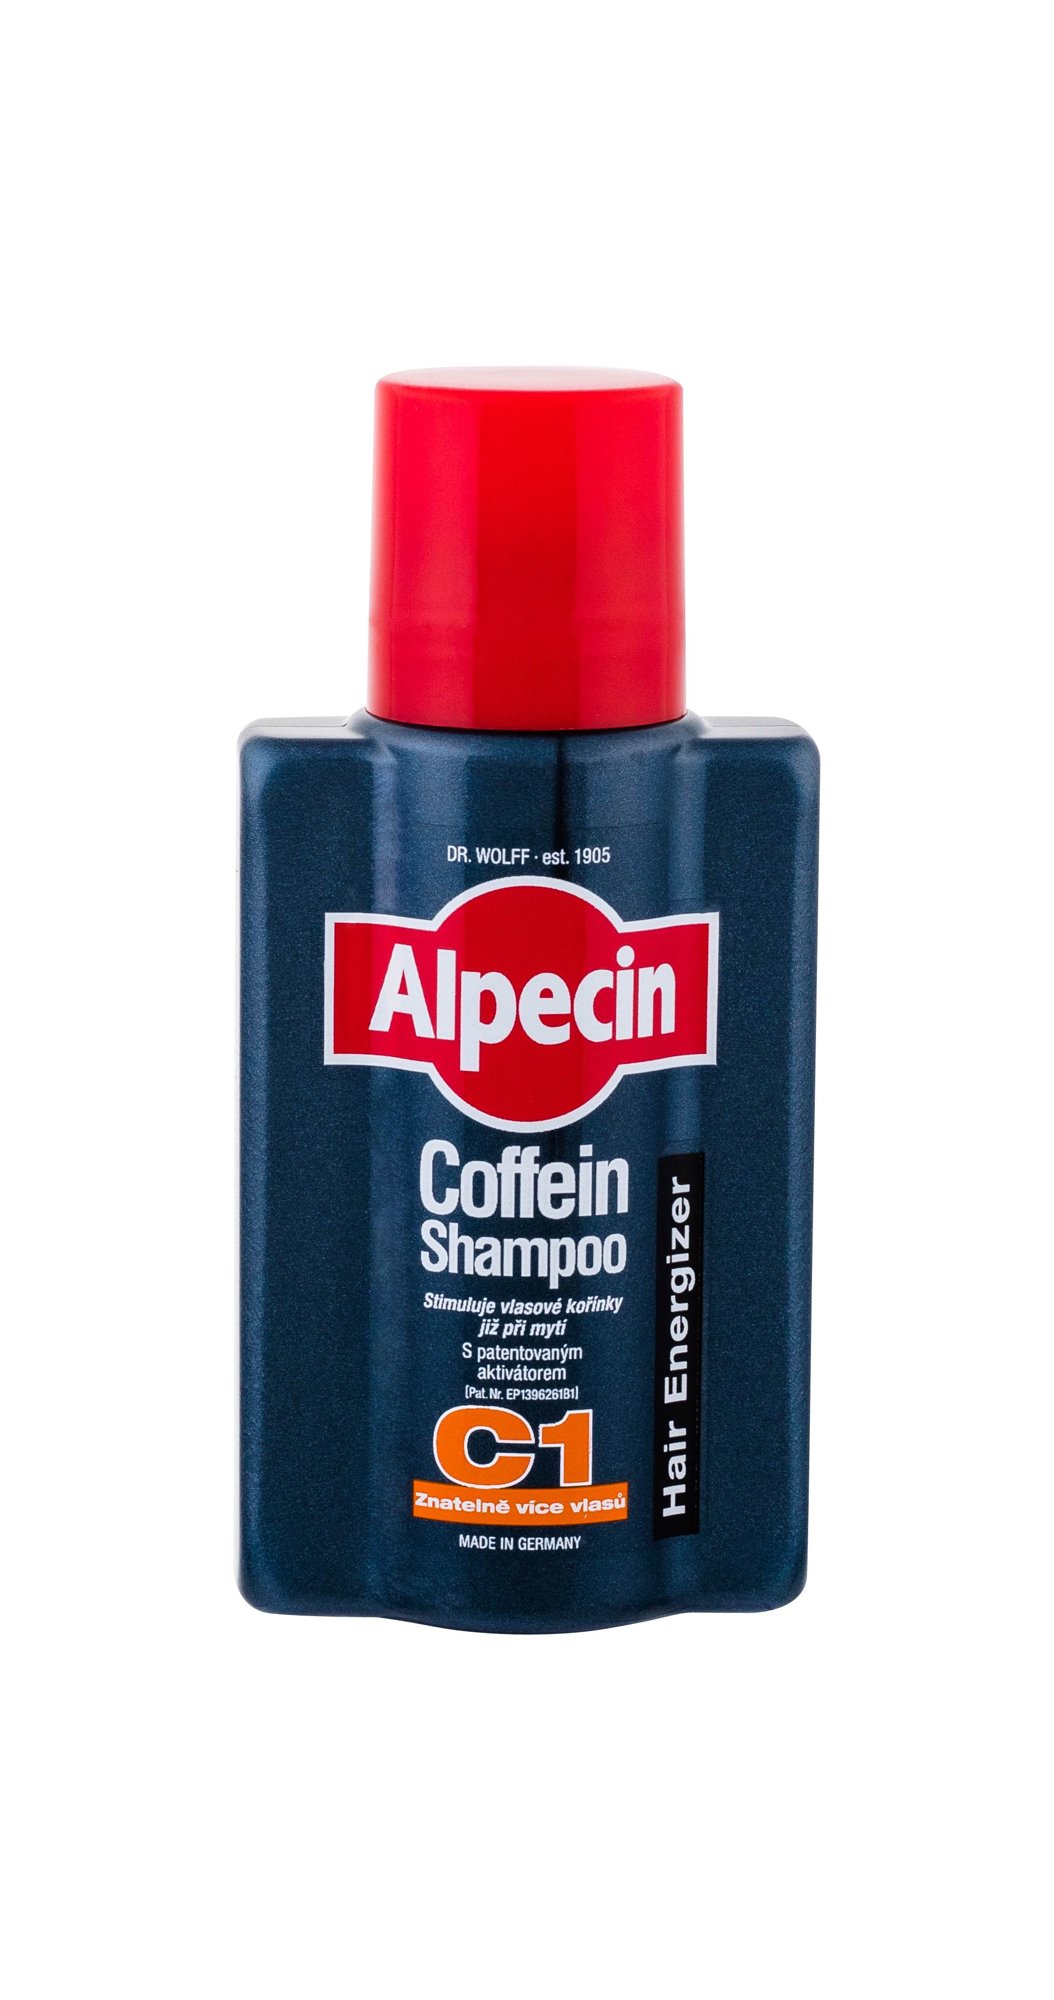 Alpecin Coffein Shampoo C1 75ml šampūnas